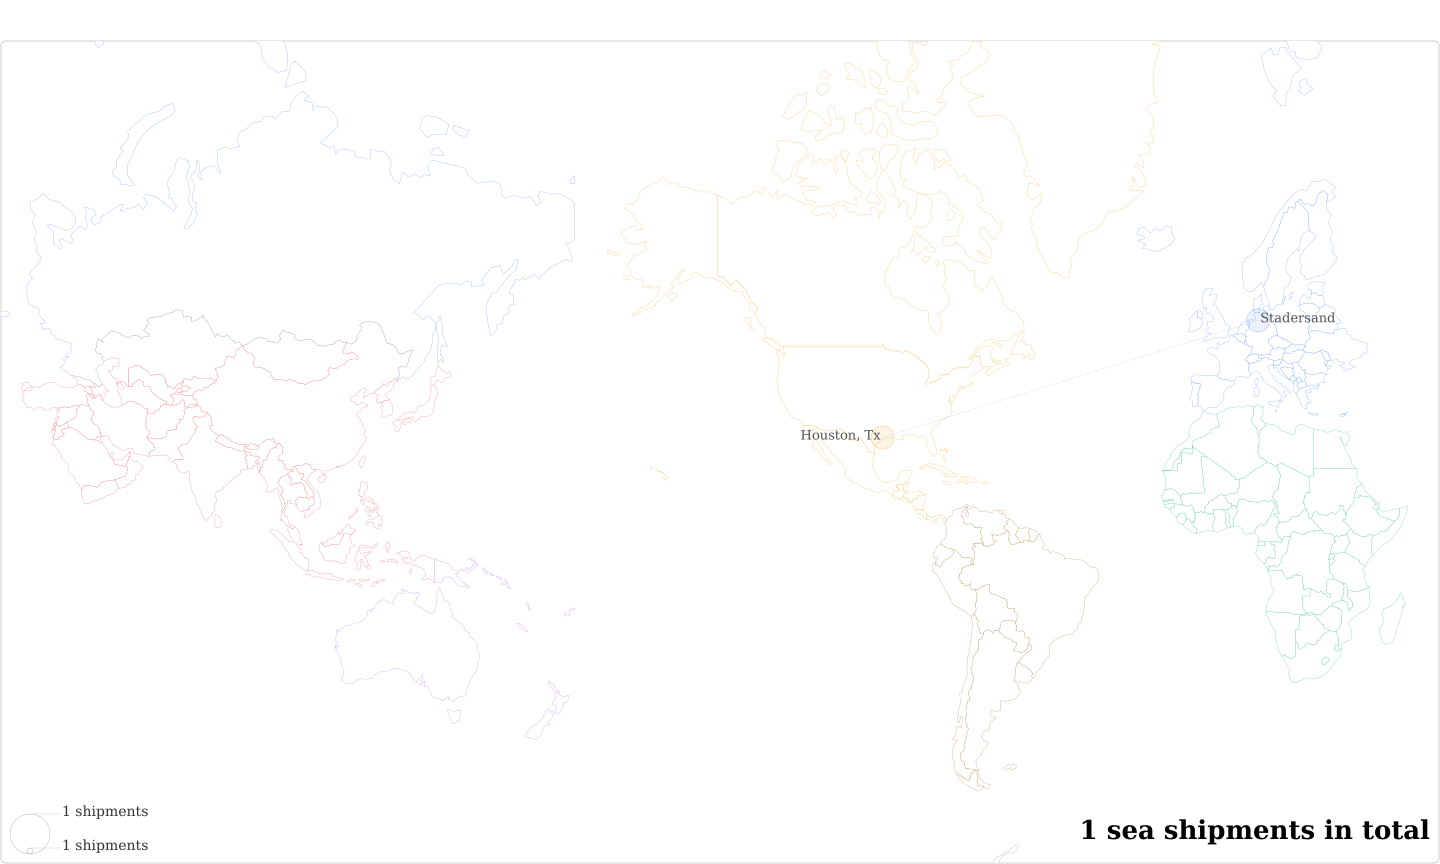 Alvibra's Imports Per Country Map